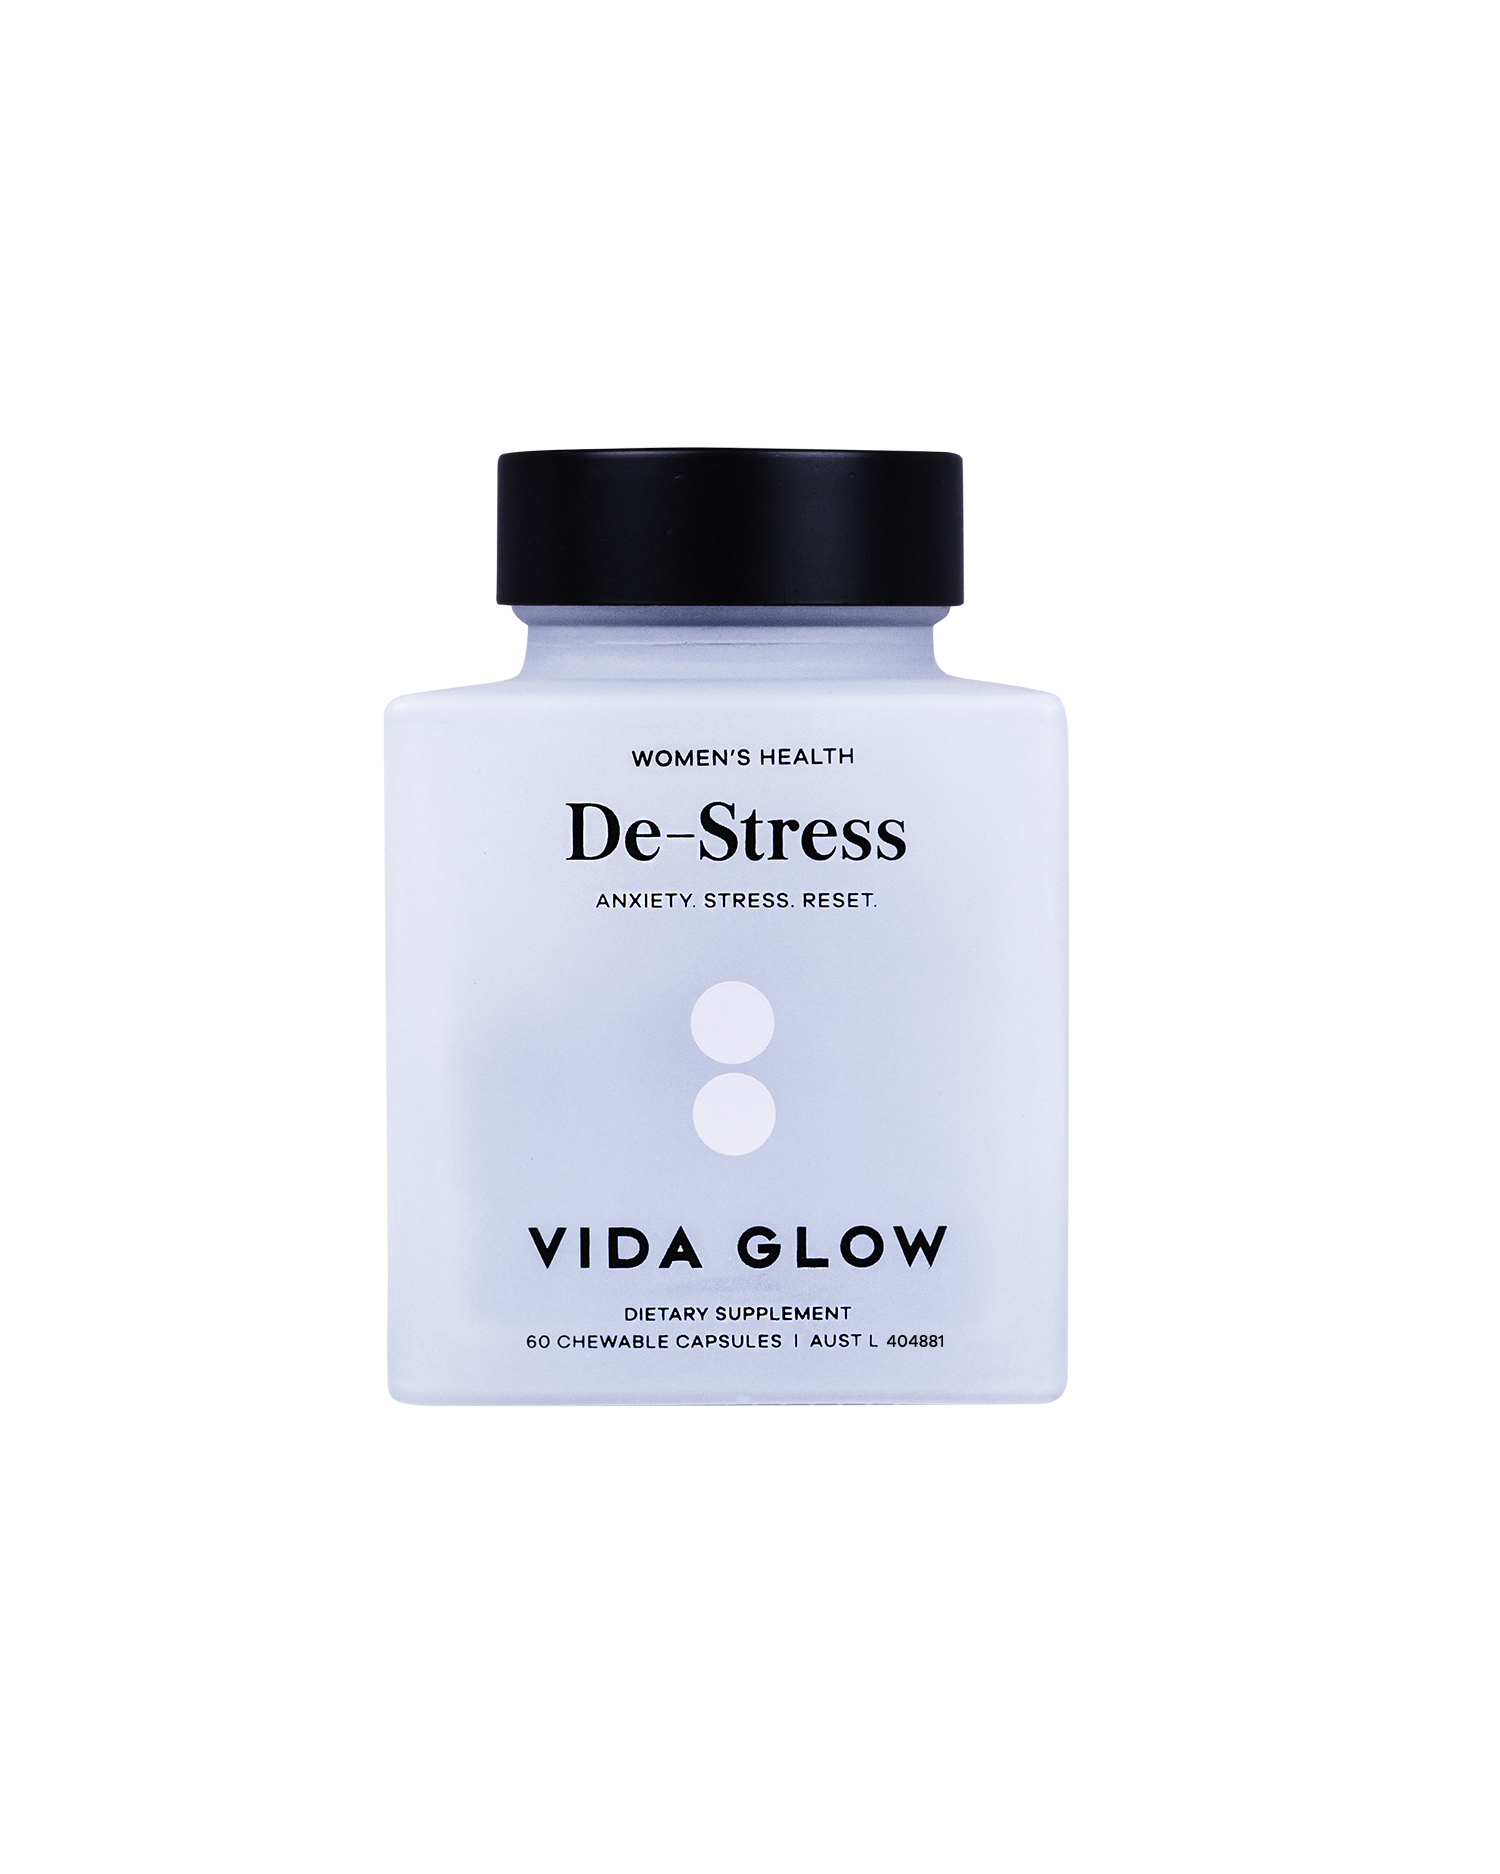 Vida Glow De-Stress Supplements - 60 Chewable Capsules